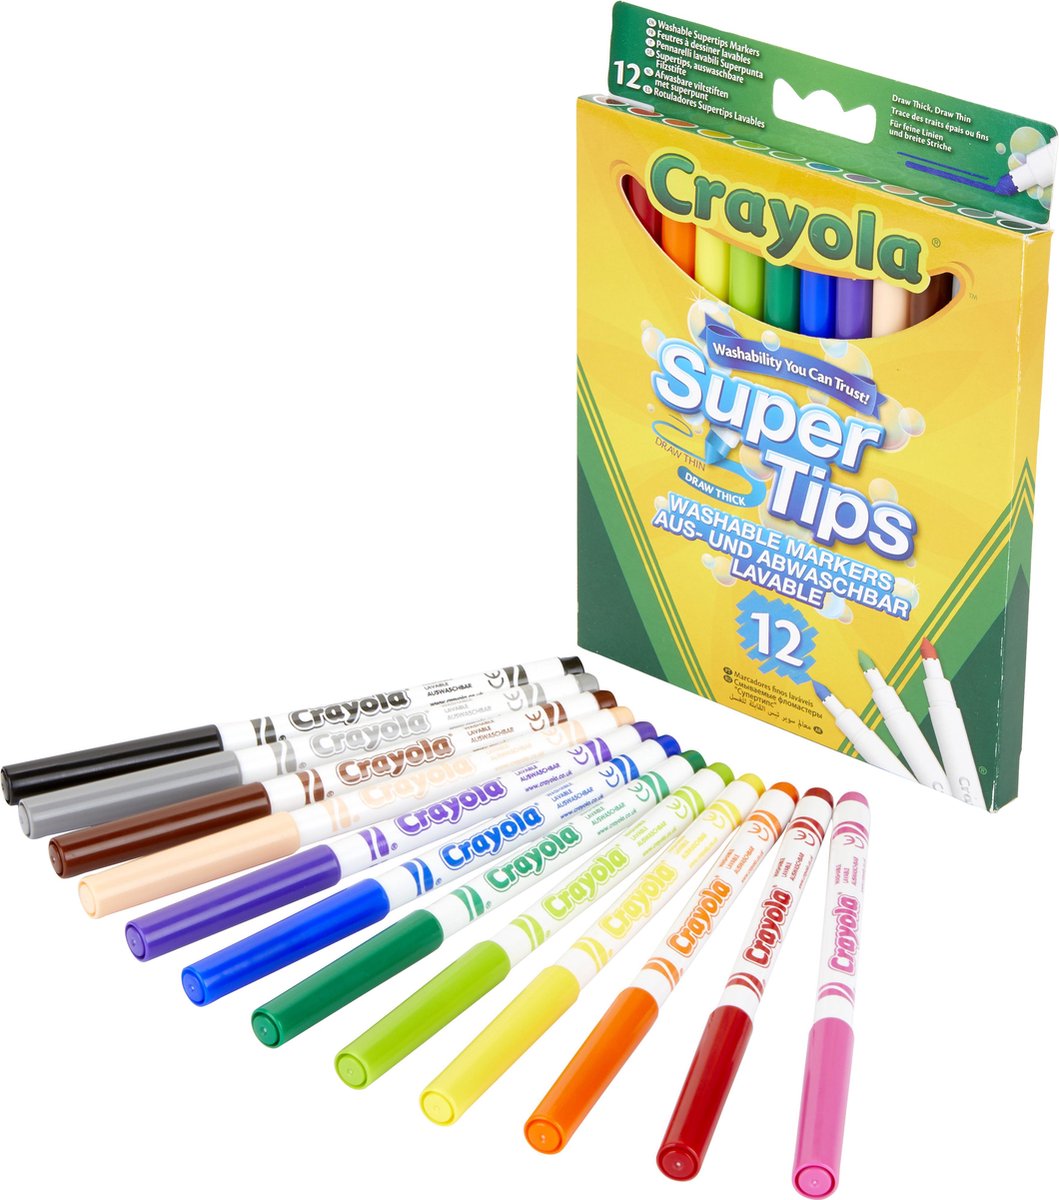 Marqueurs Crayola avec Super Point 24pcs.